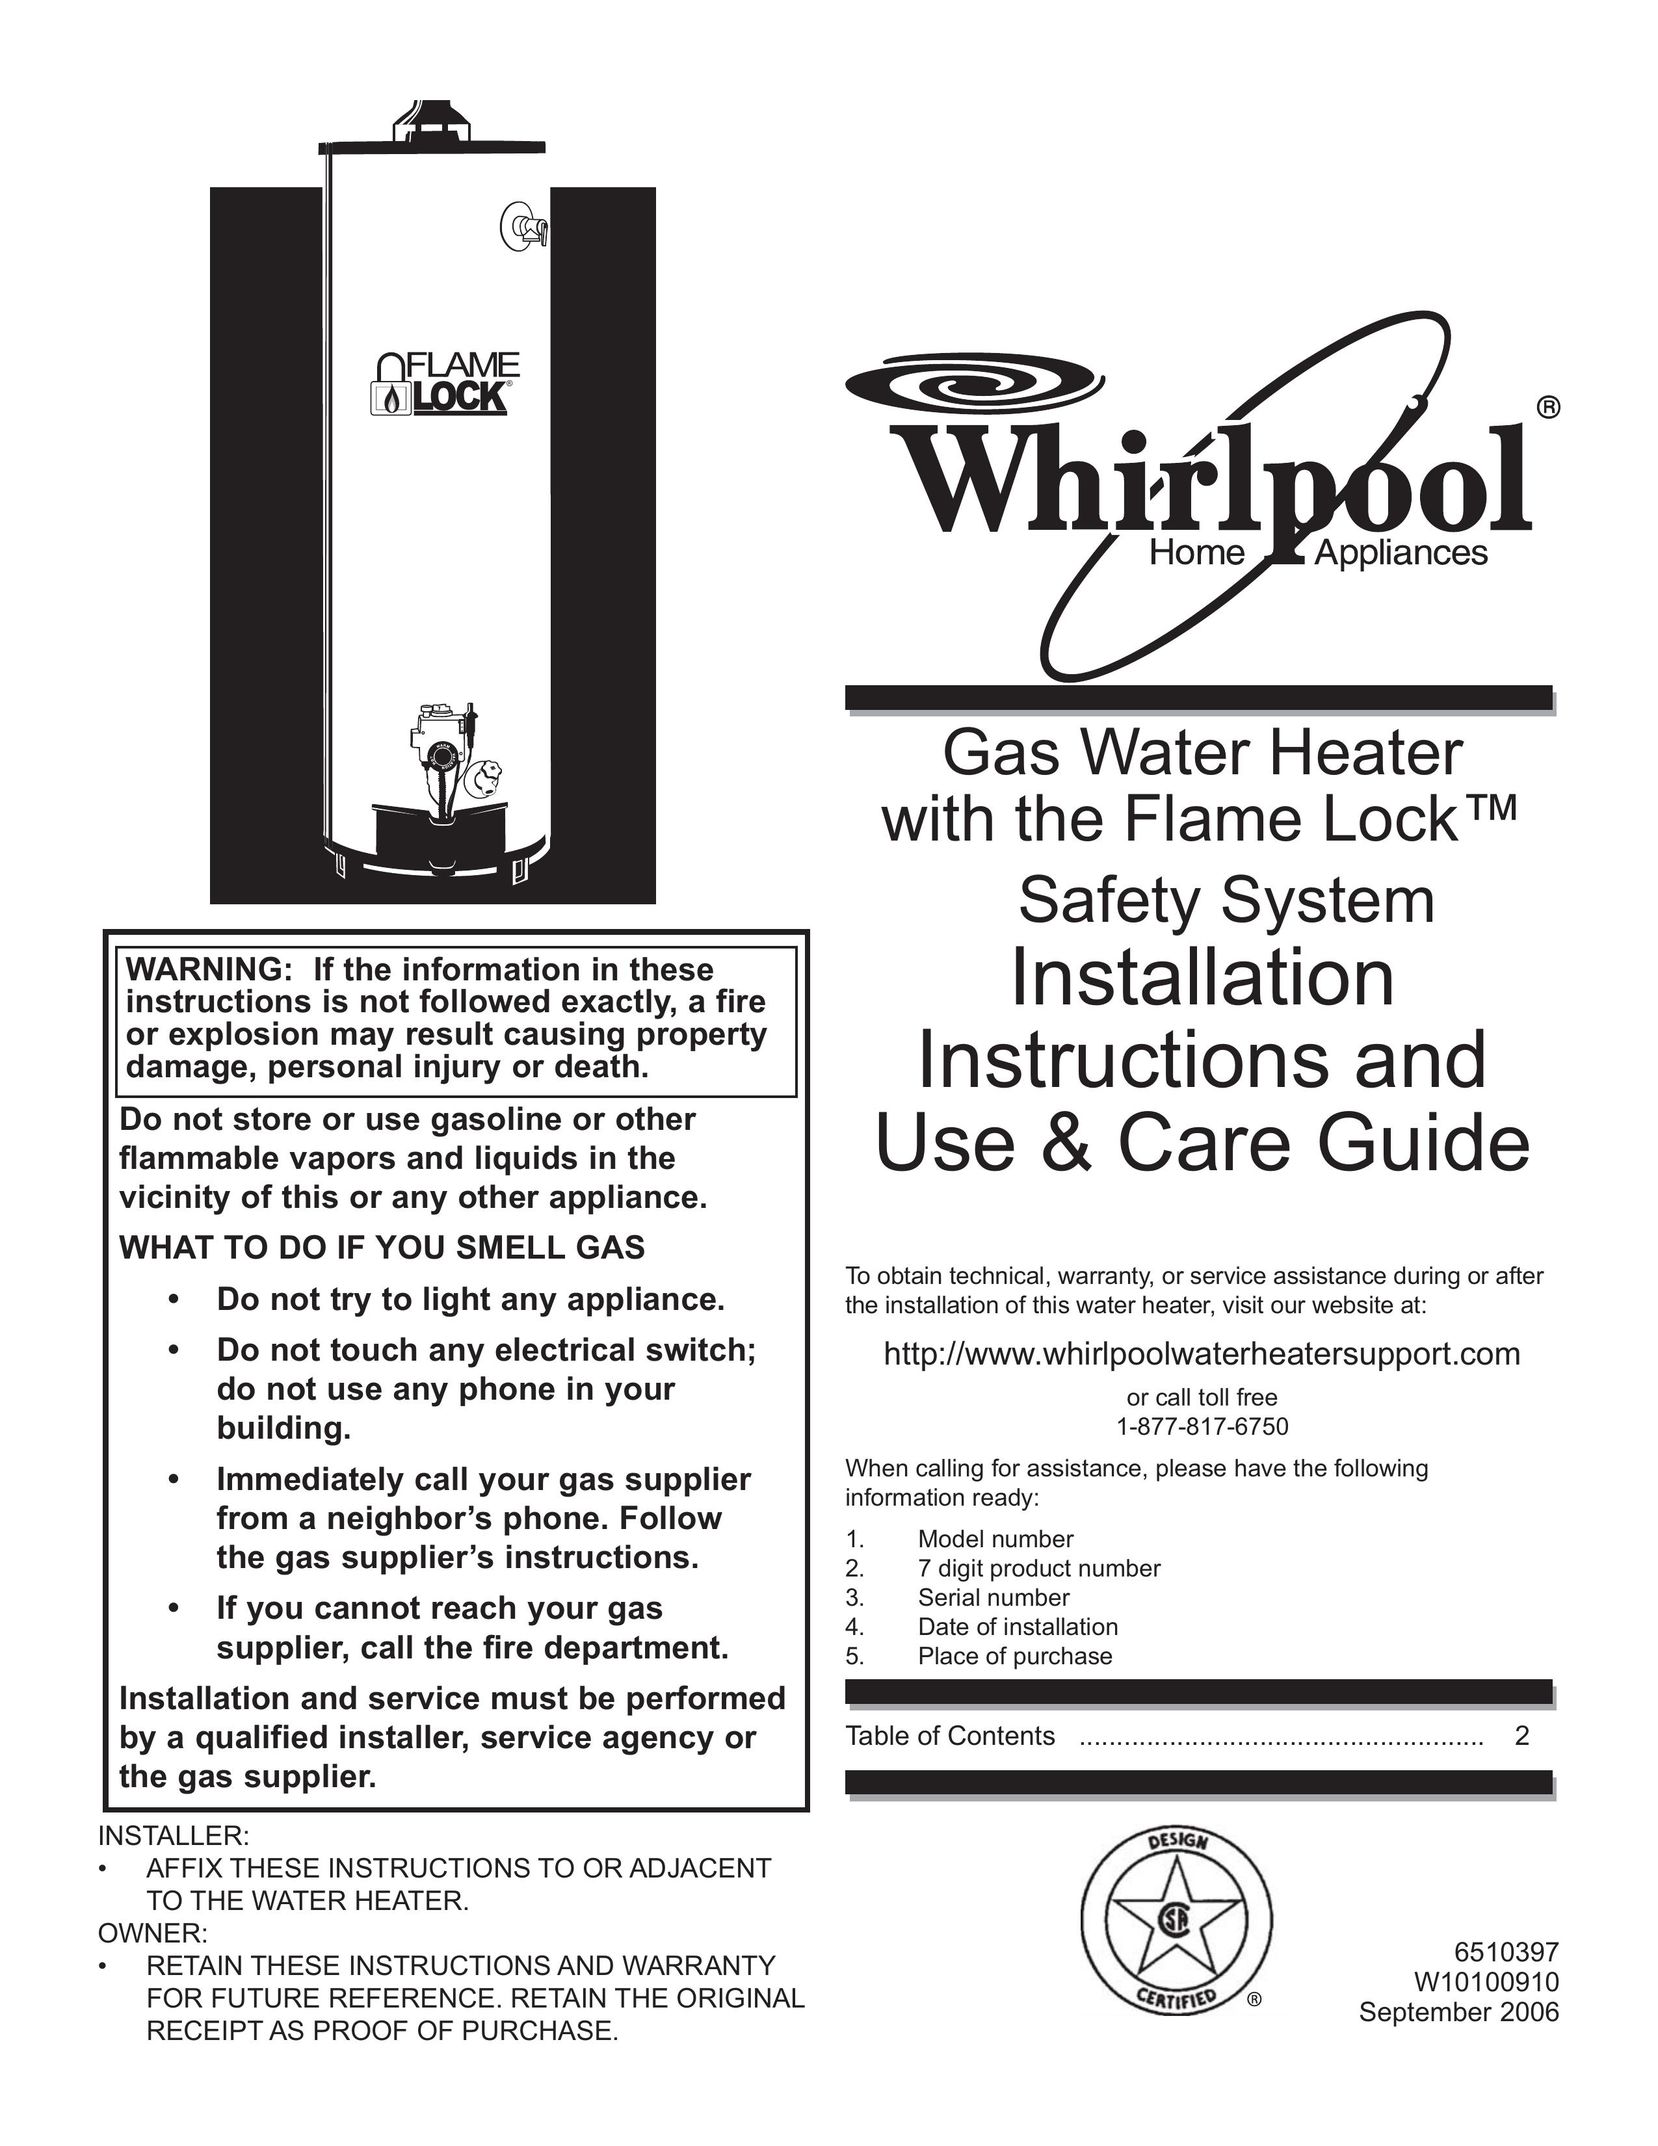 Whirlpool 195102 Water Heater User Manual